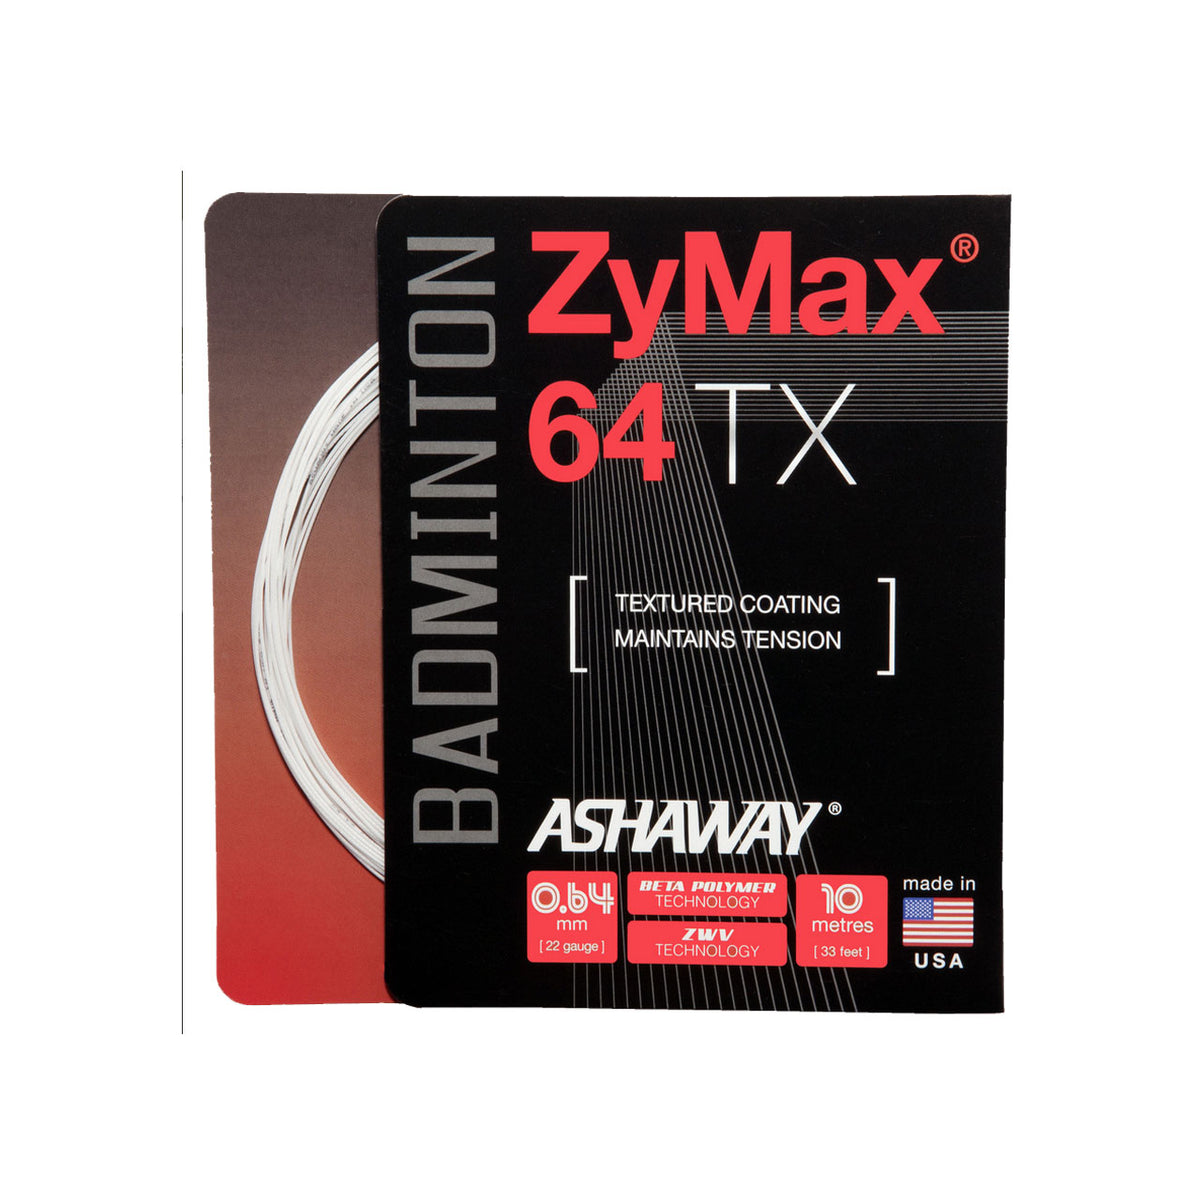 Ashaway Zymax 64TX String (10m Set) White